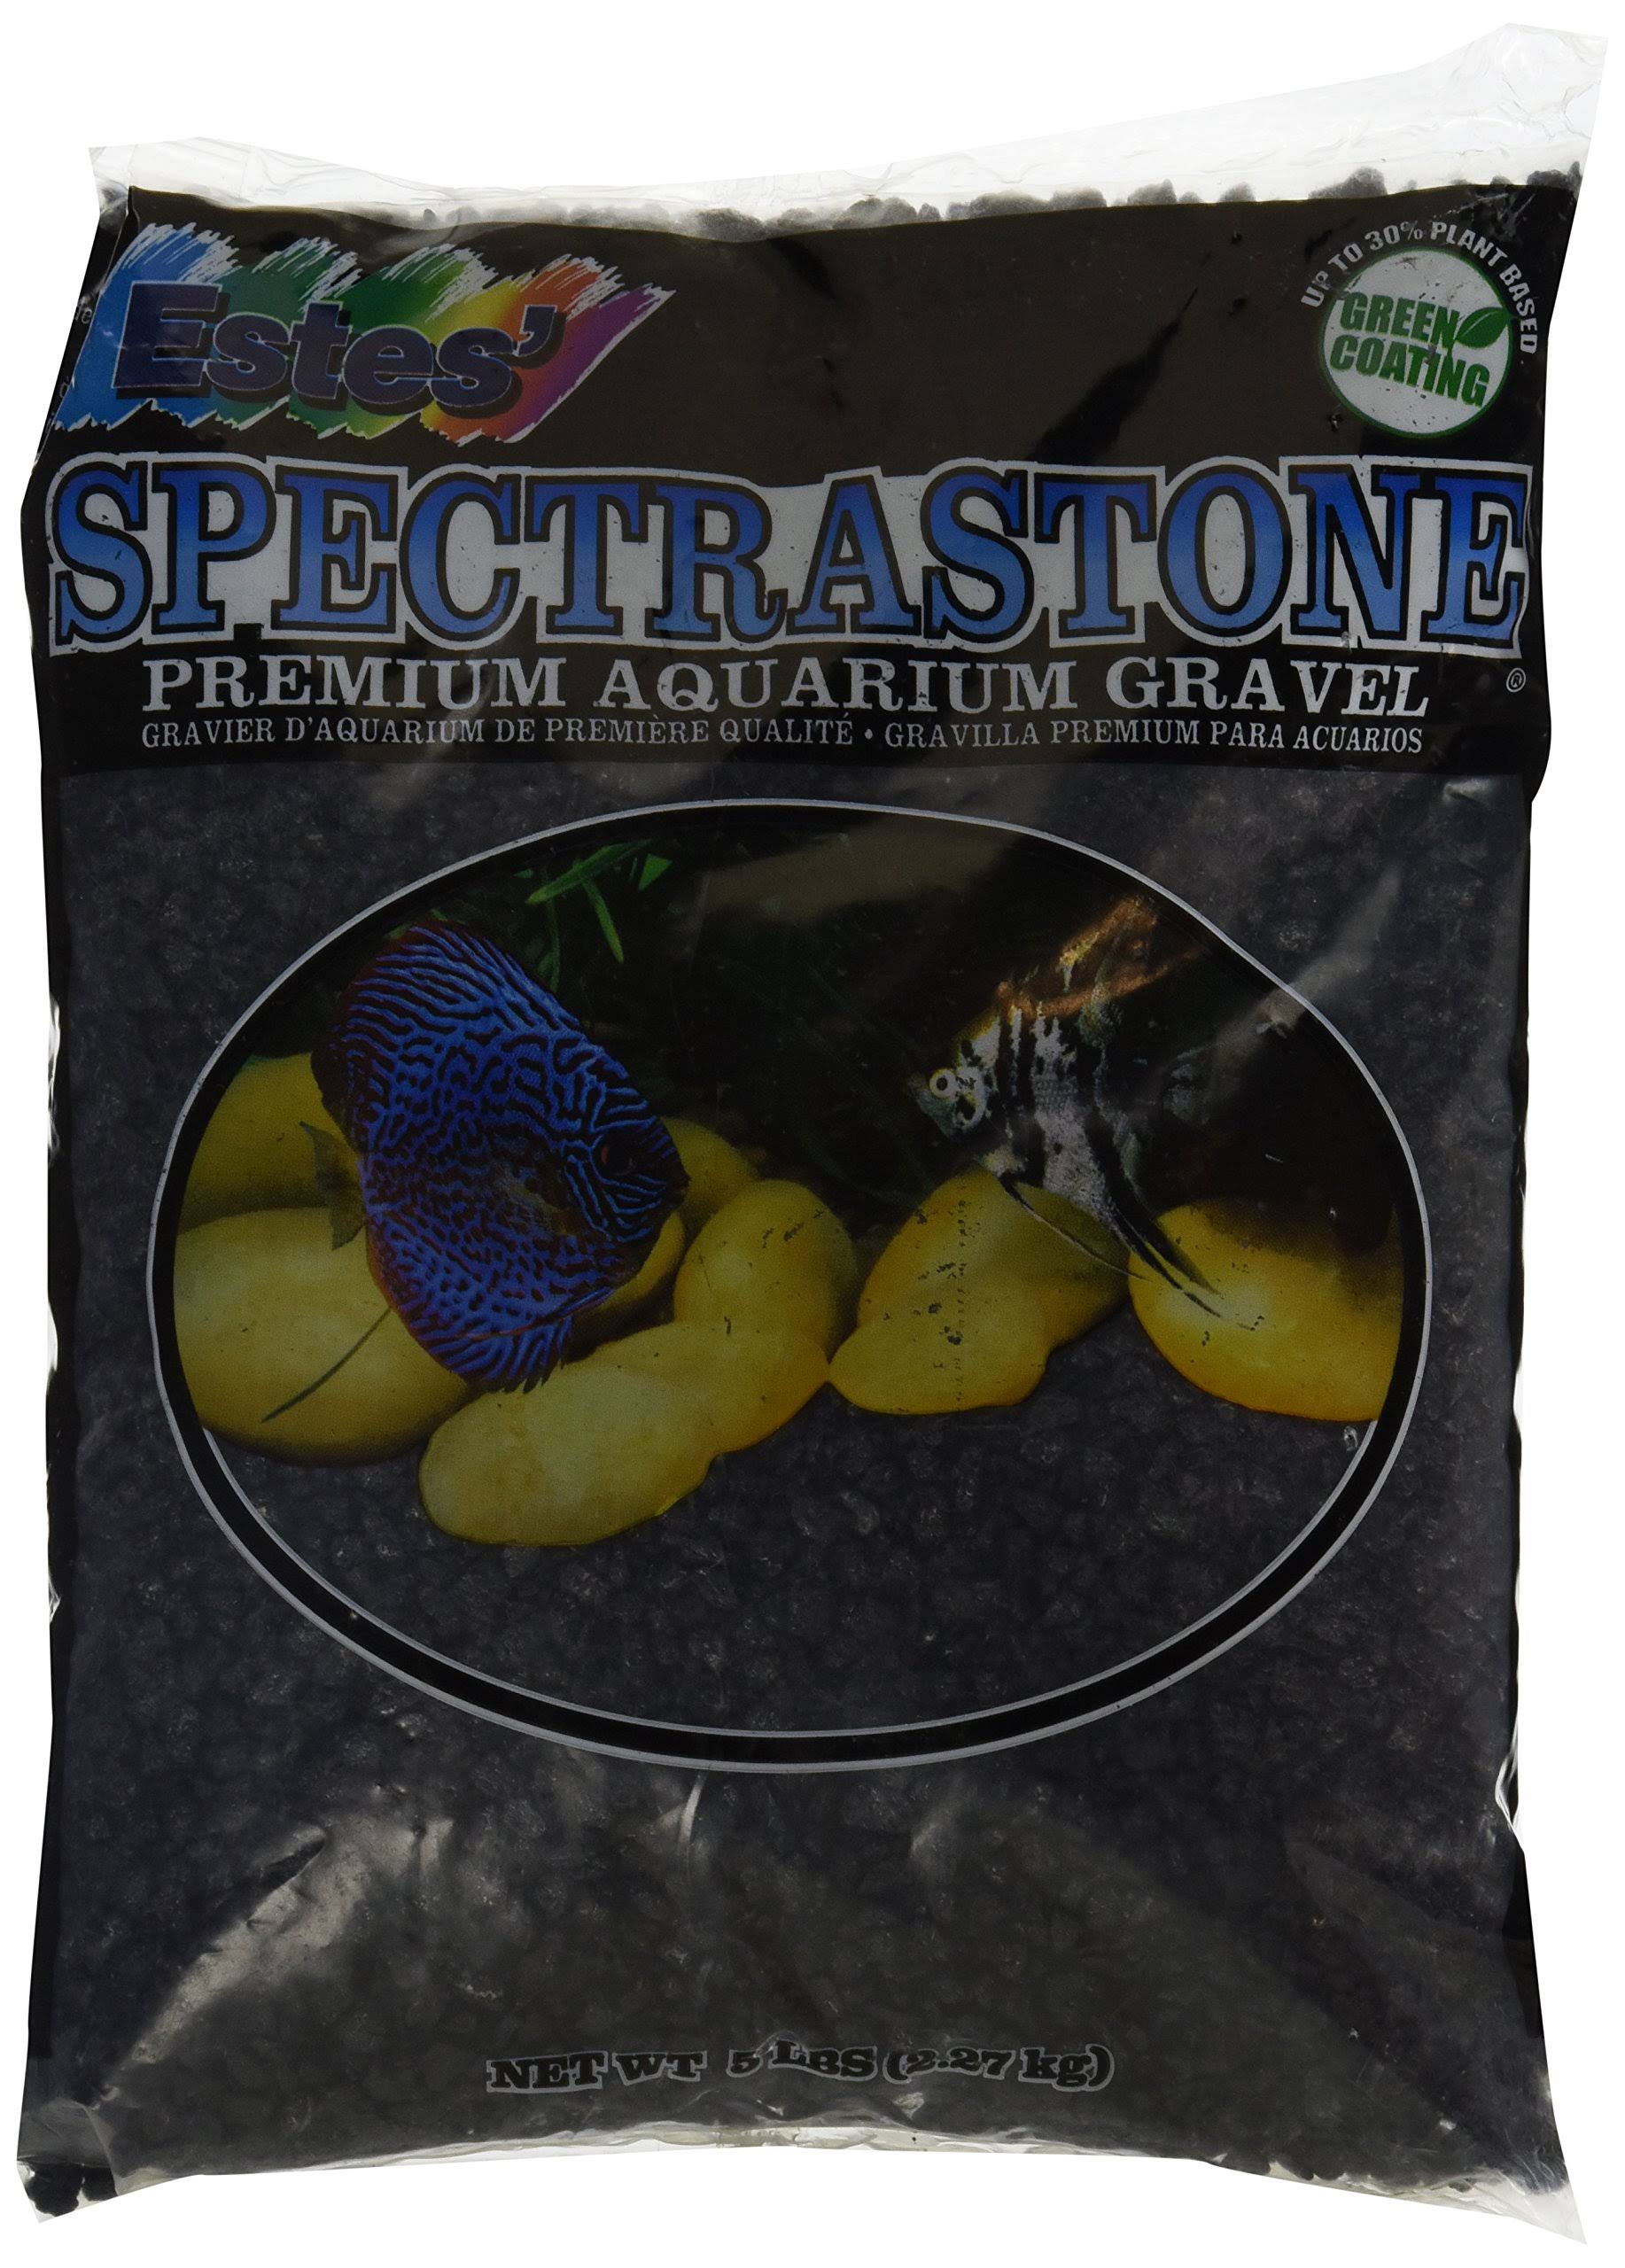 Spectrastone Special Black Aquarium Gravel for Freshwater Aquariums 5-Pound Bag